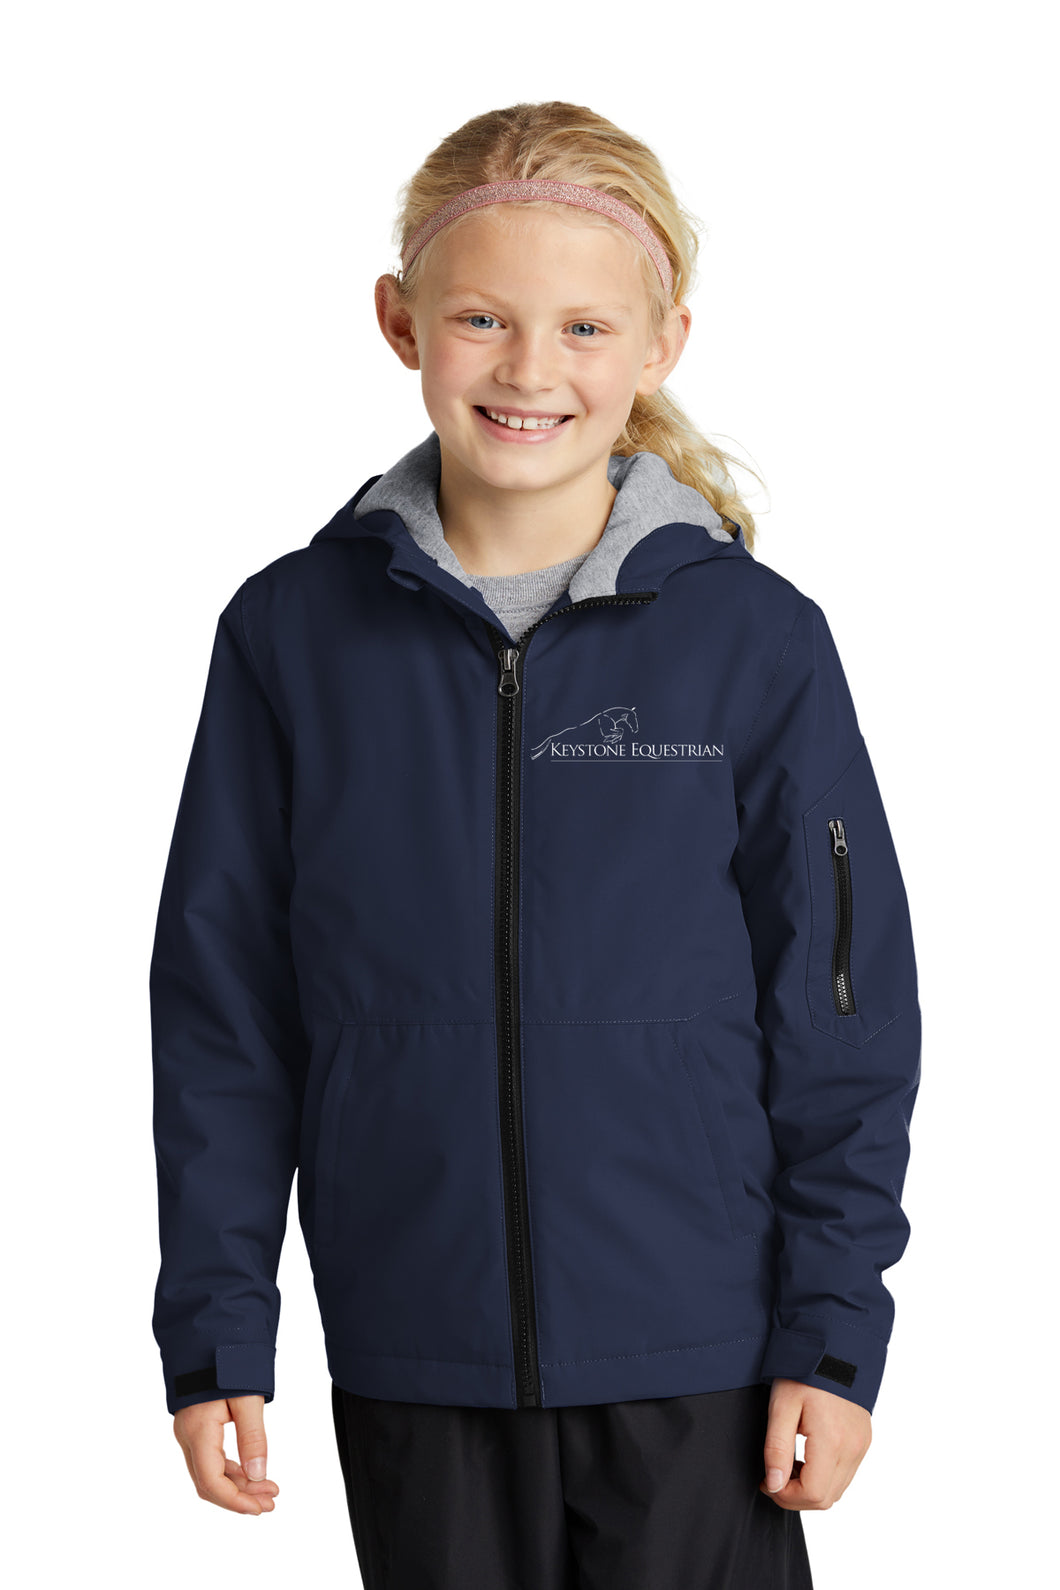 Keystone Eq- Sport Tek- Youth Waterproof Insulated Jacket